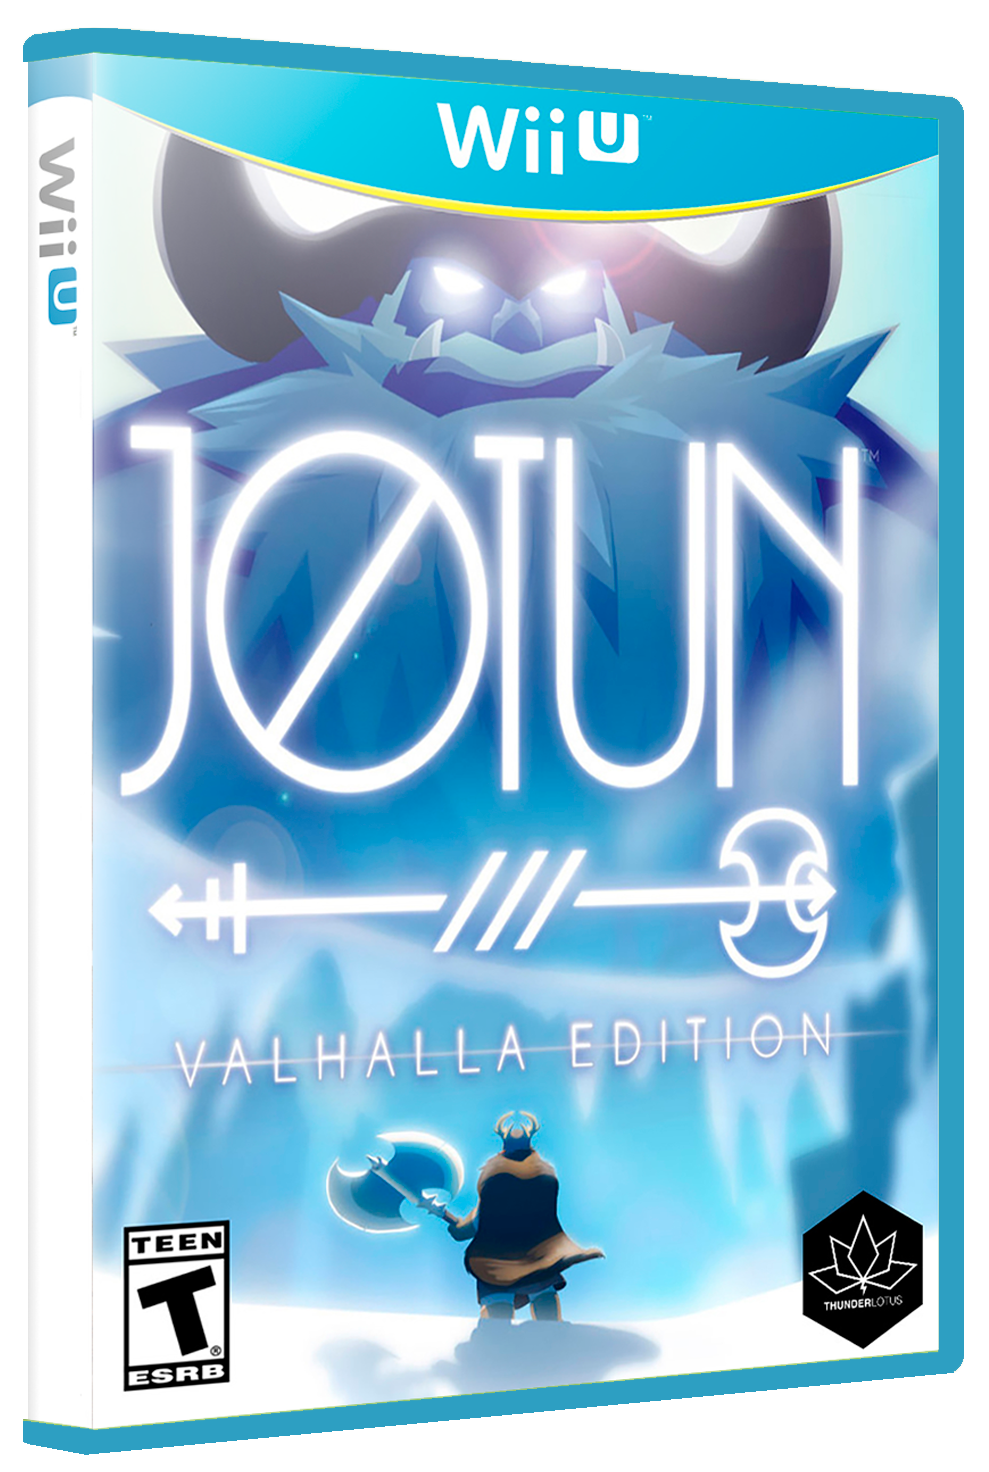 jotun valhalla edition card trade market